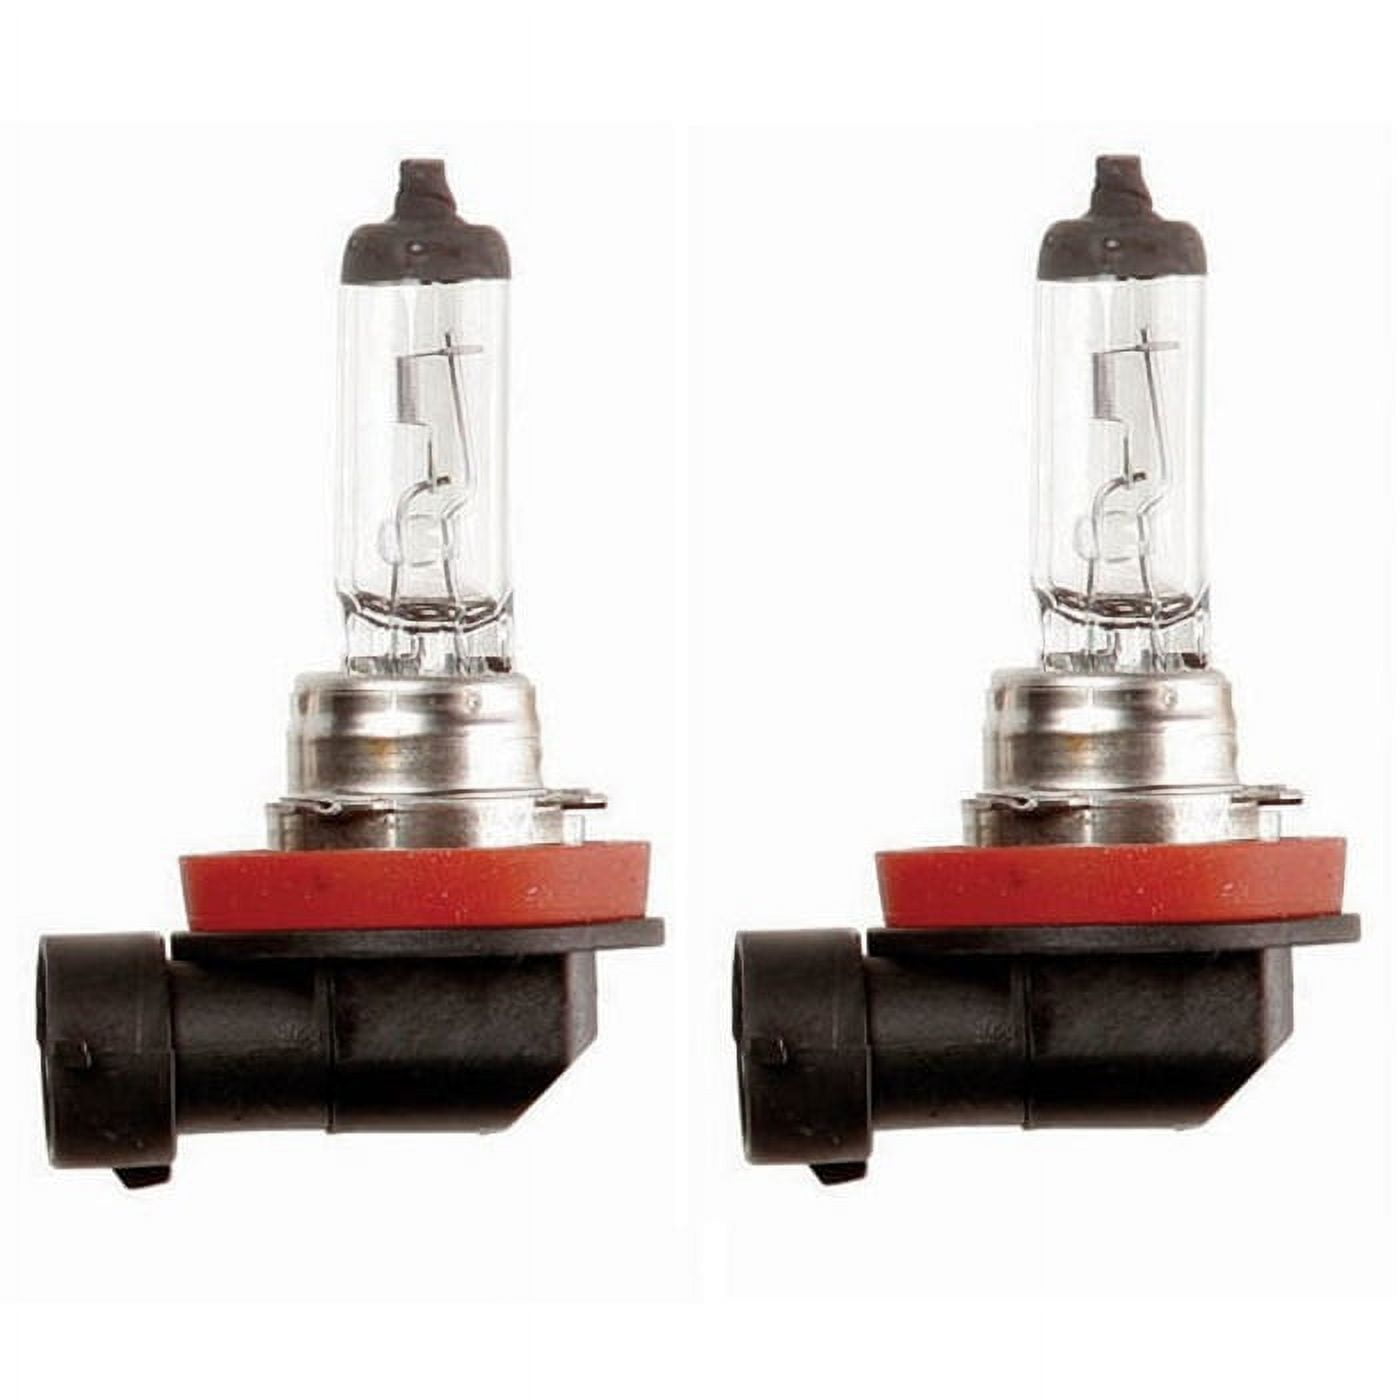 Safego H11 Halogen Headlight Bulb 2Pcs 55W Halogen Bulbs Replacement for  Car Headlight Bulb 12V Xenon White,1 Year Warranty